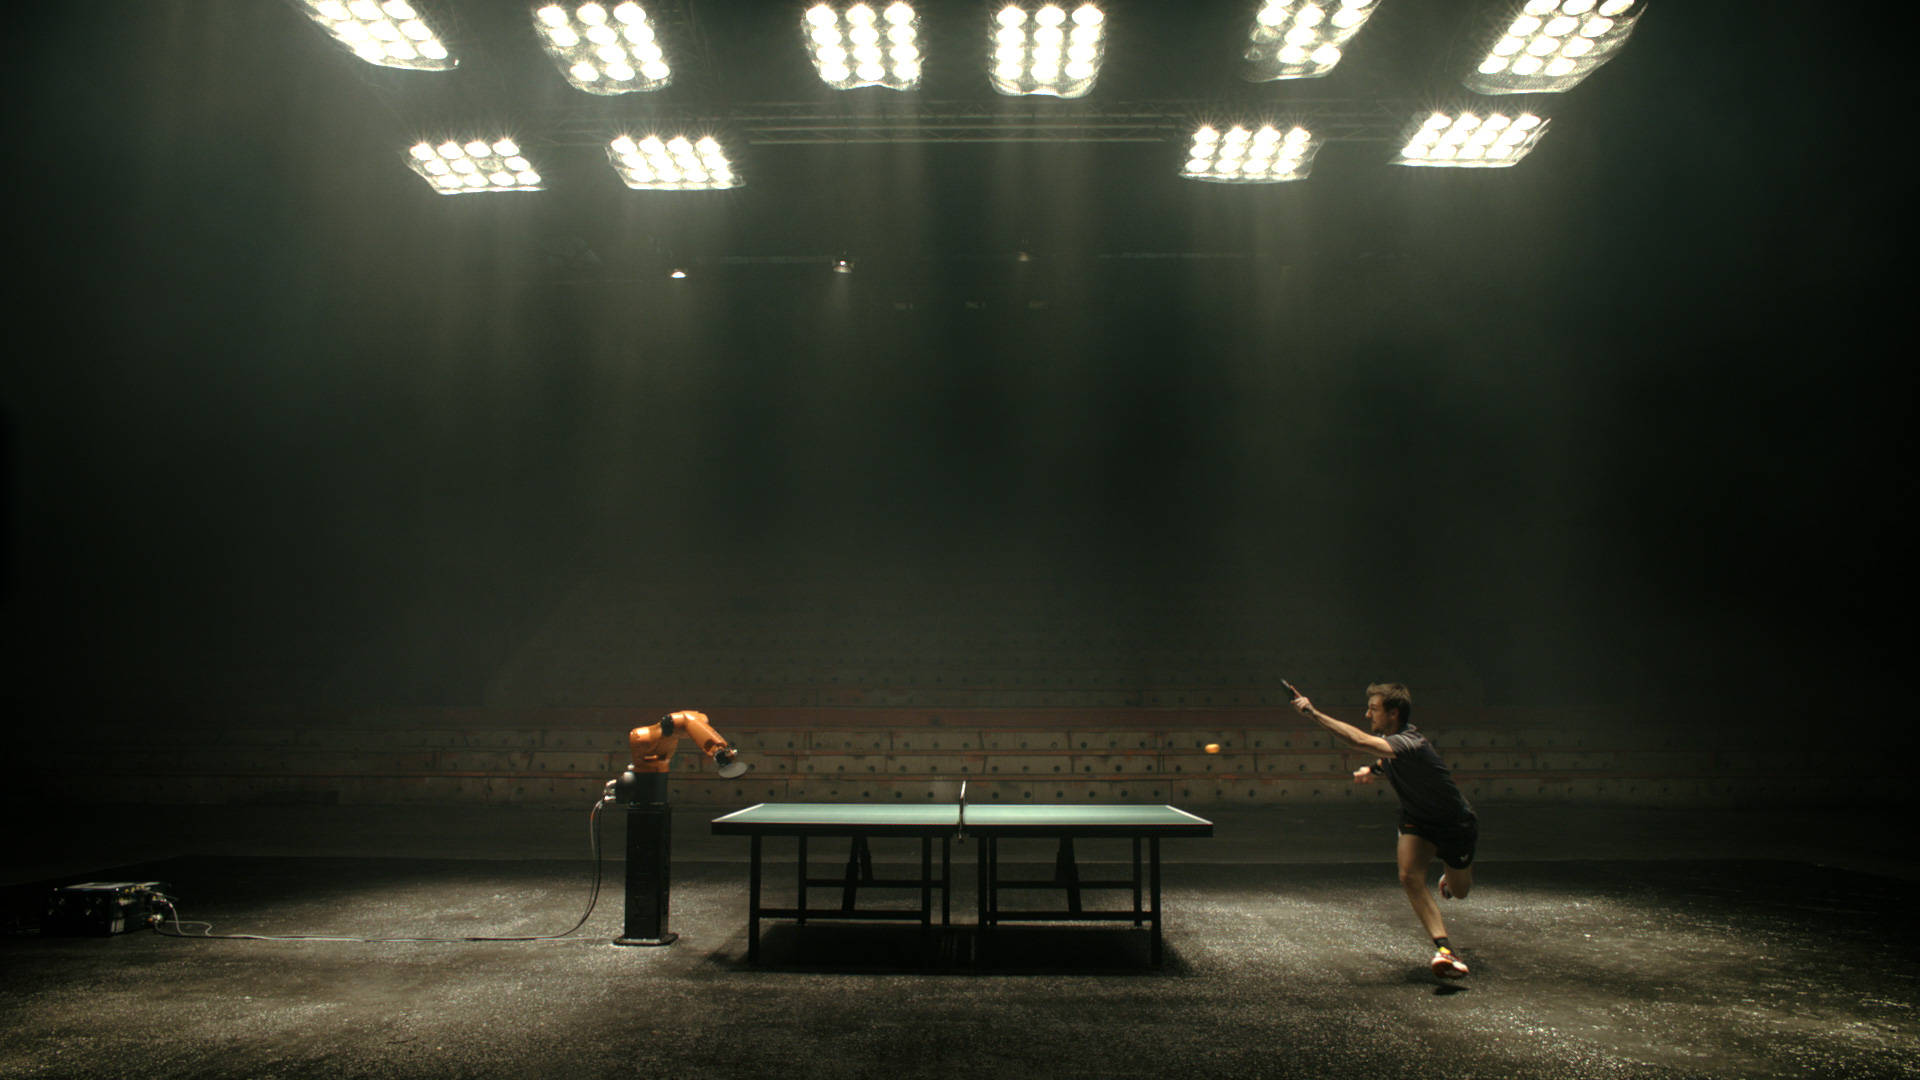 High-tech Robotic Ping Pong Match Background